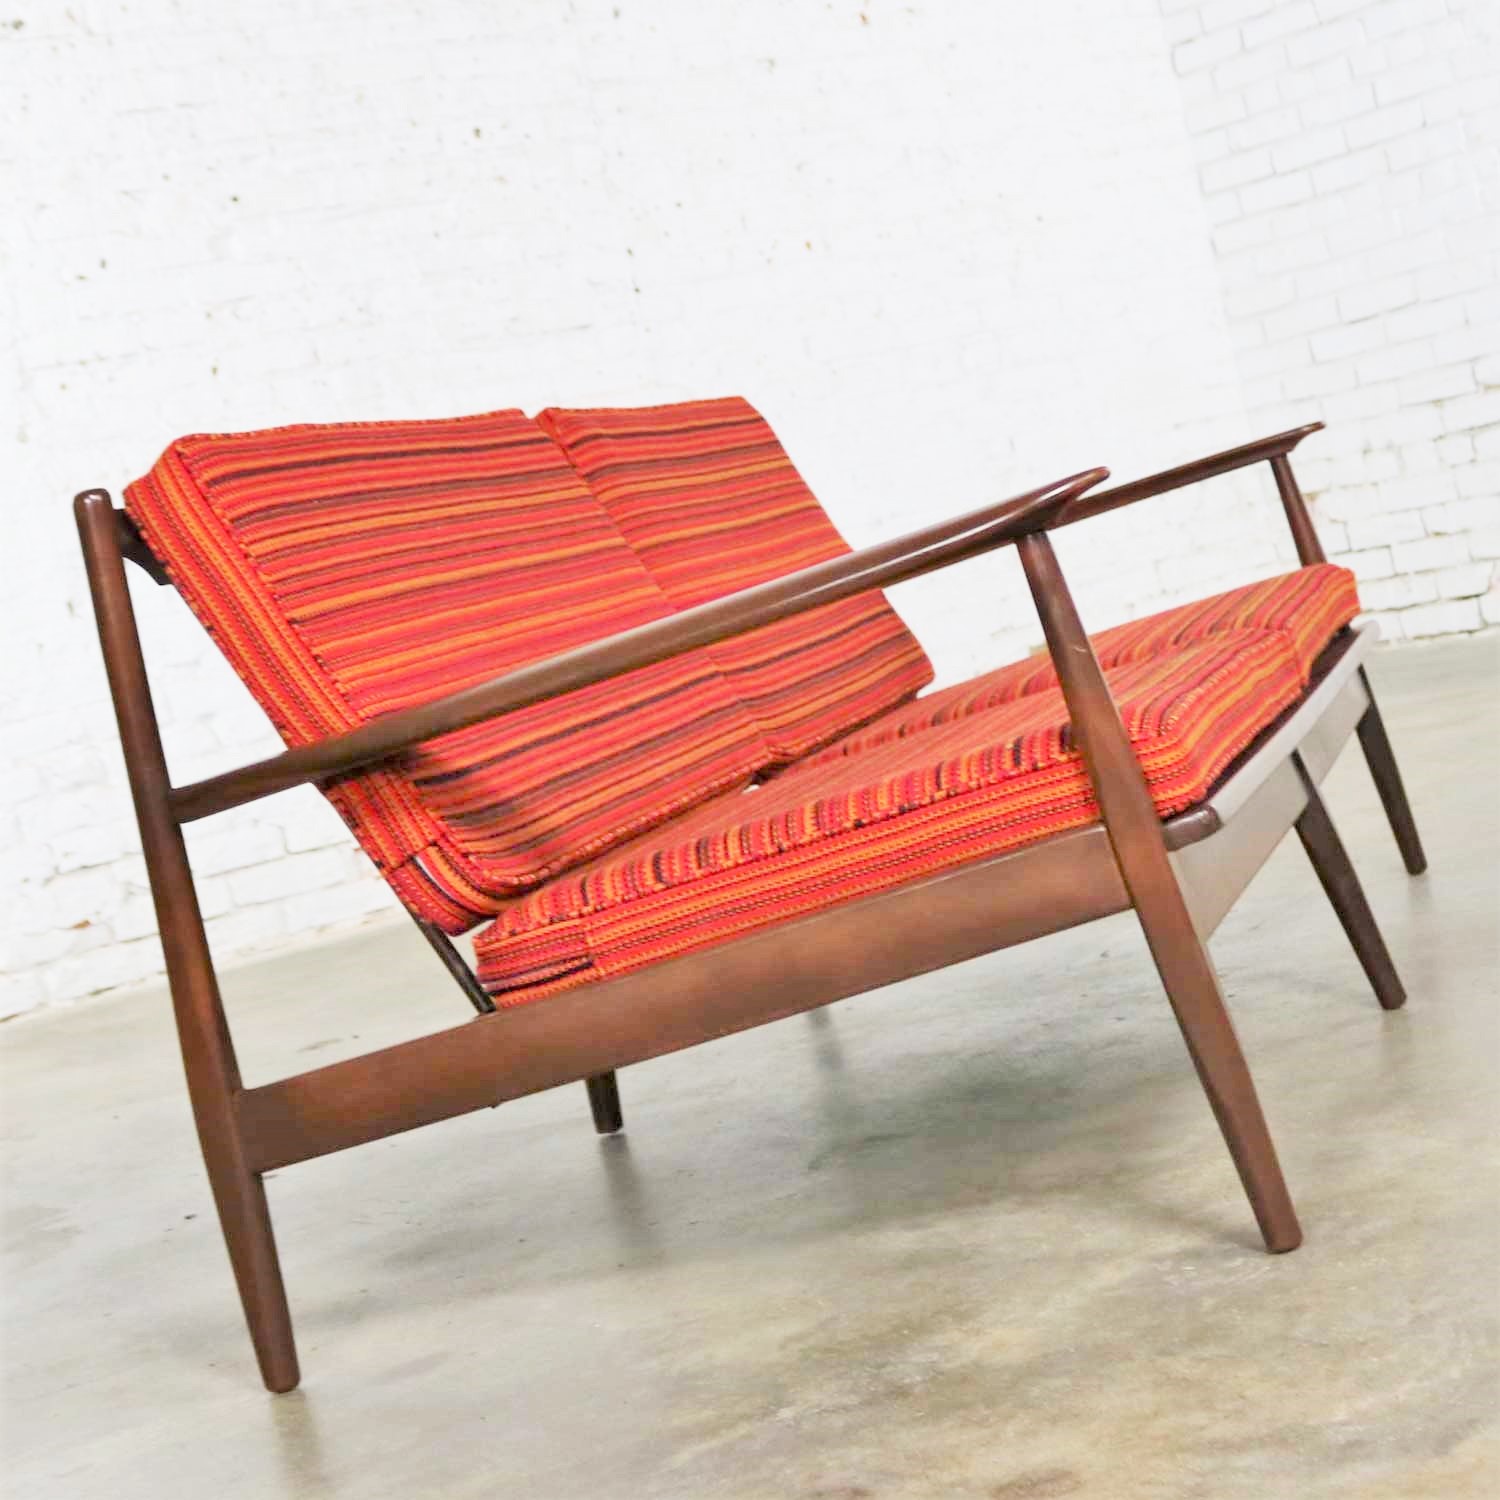 Vintage Danish or Scandinavian Modern Loose Cushion Sofa New Red Stripe Upholstery